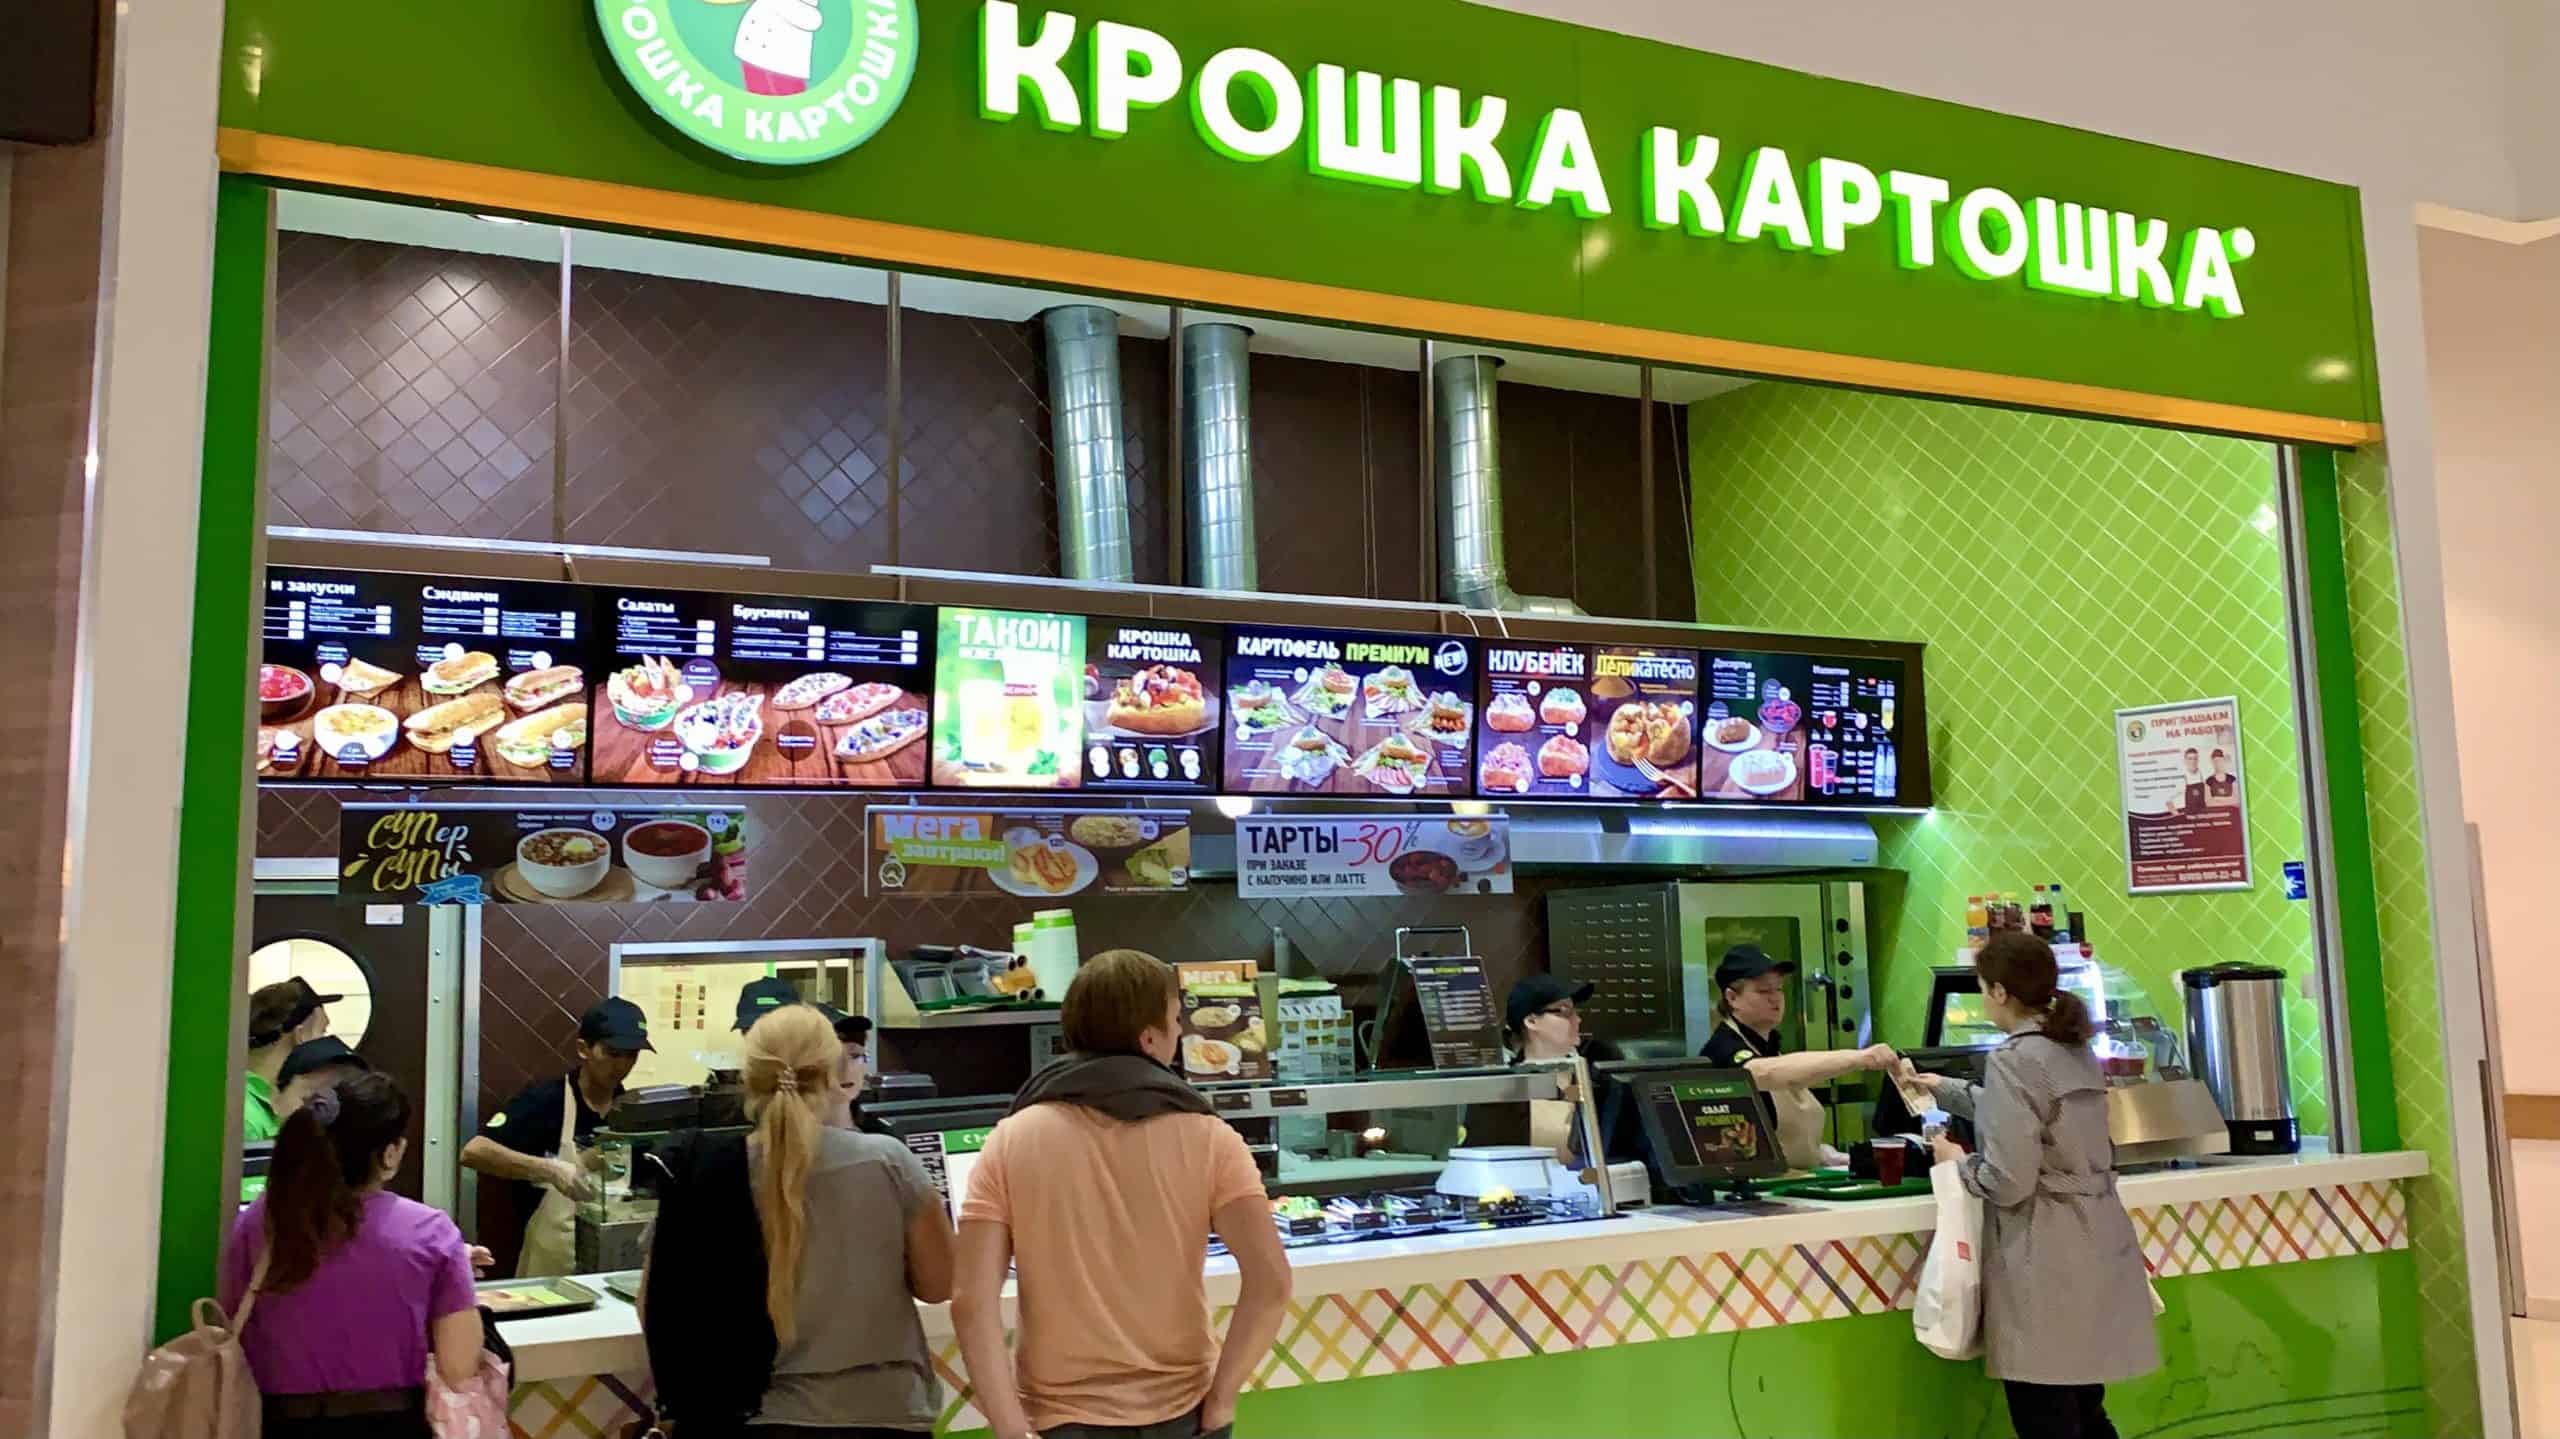 Kroshka Kartoshka Food Court restaurant in Russia